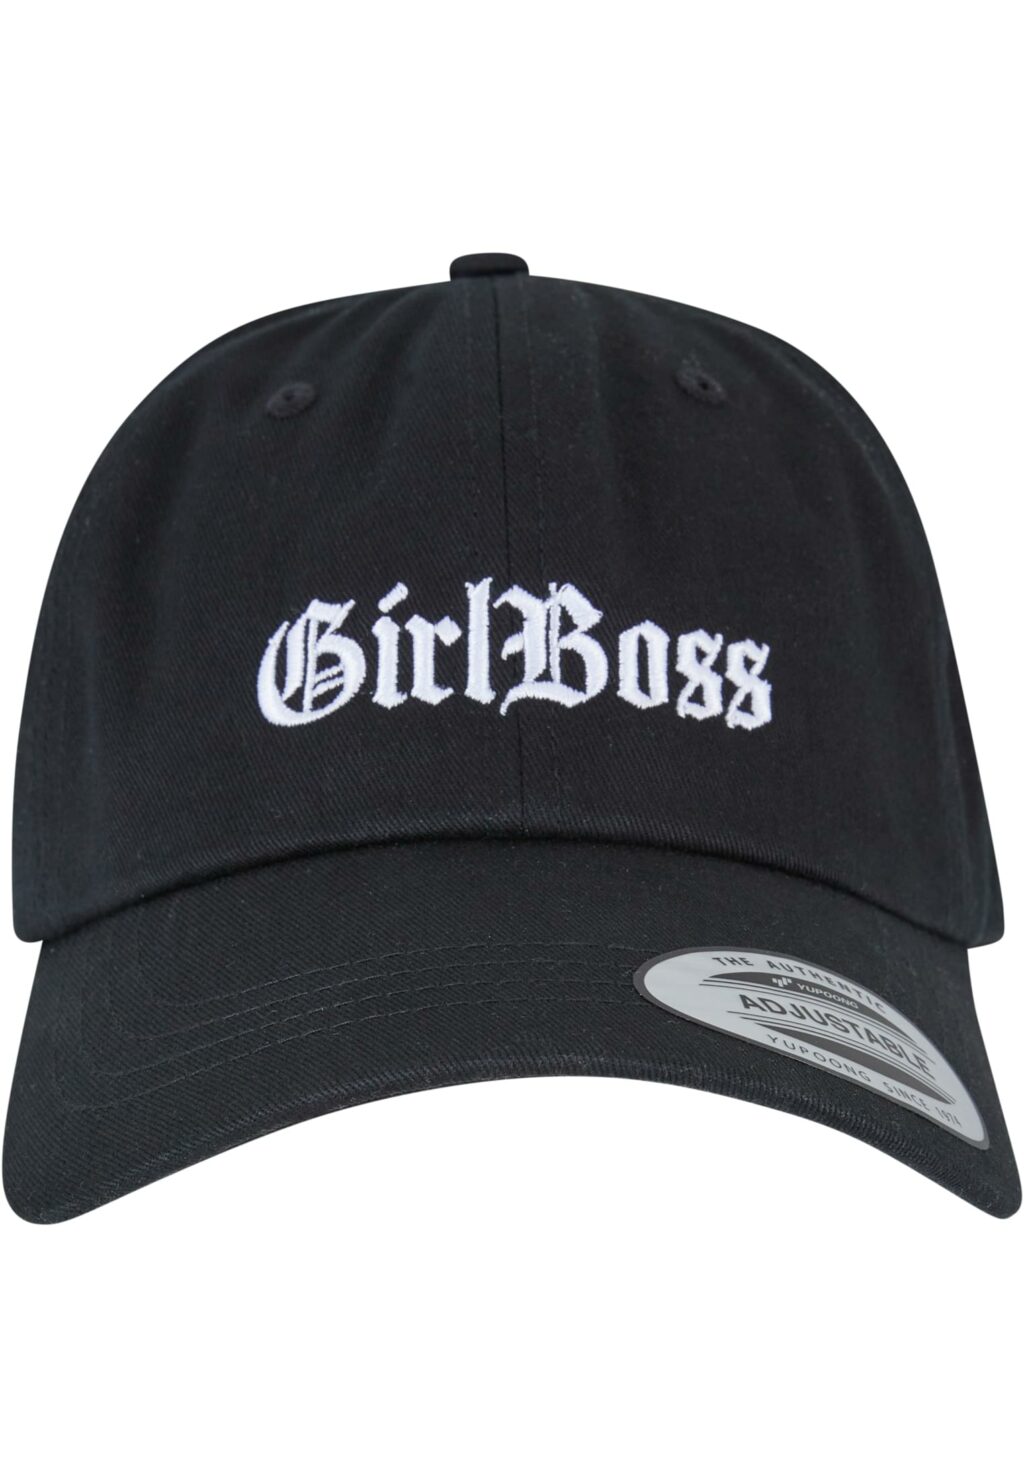 Girl Boss Dad Cap black one MST017